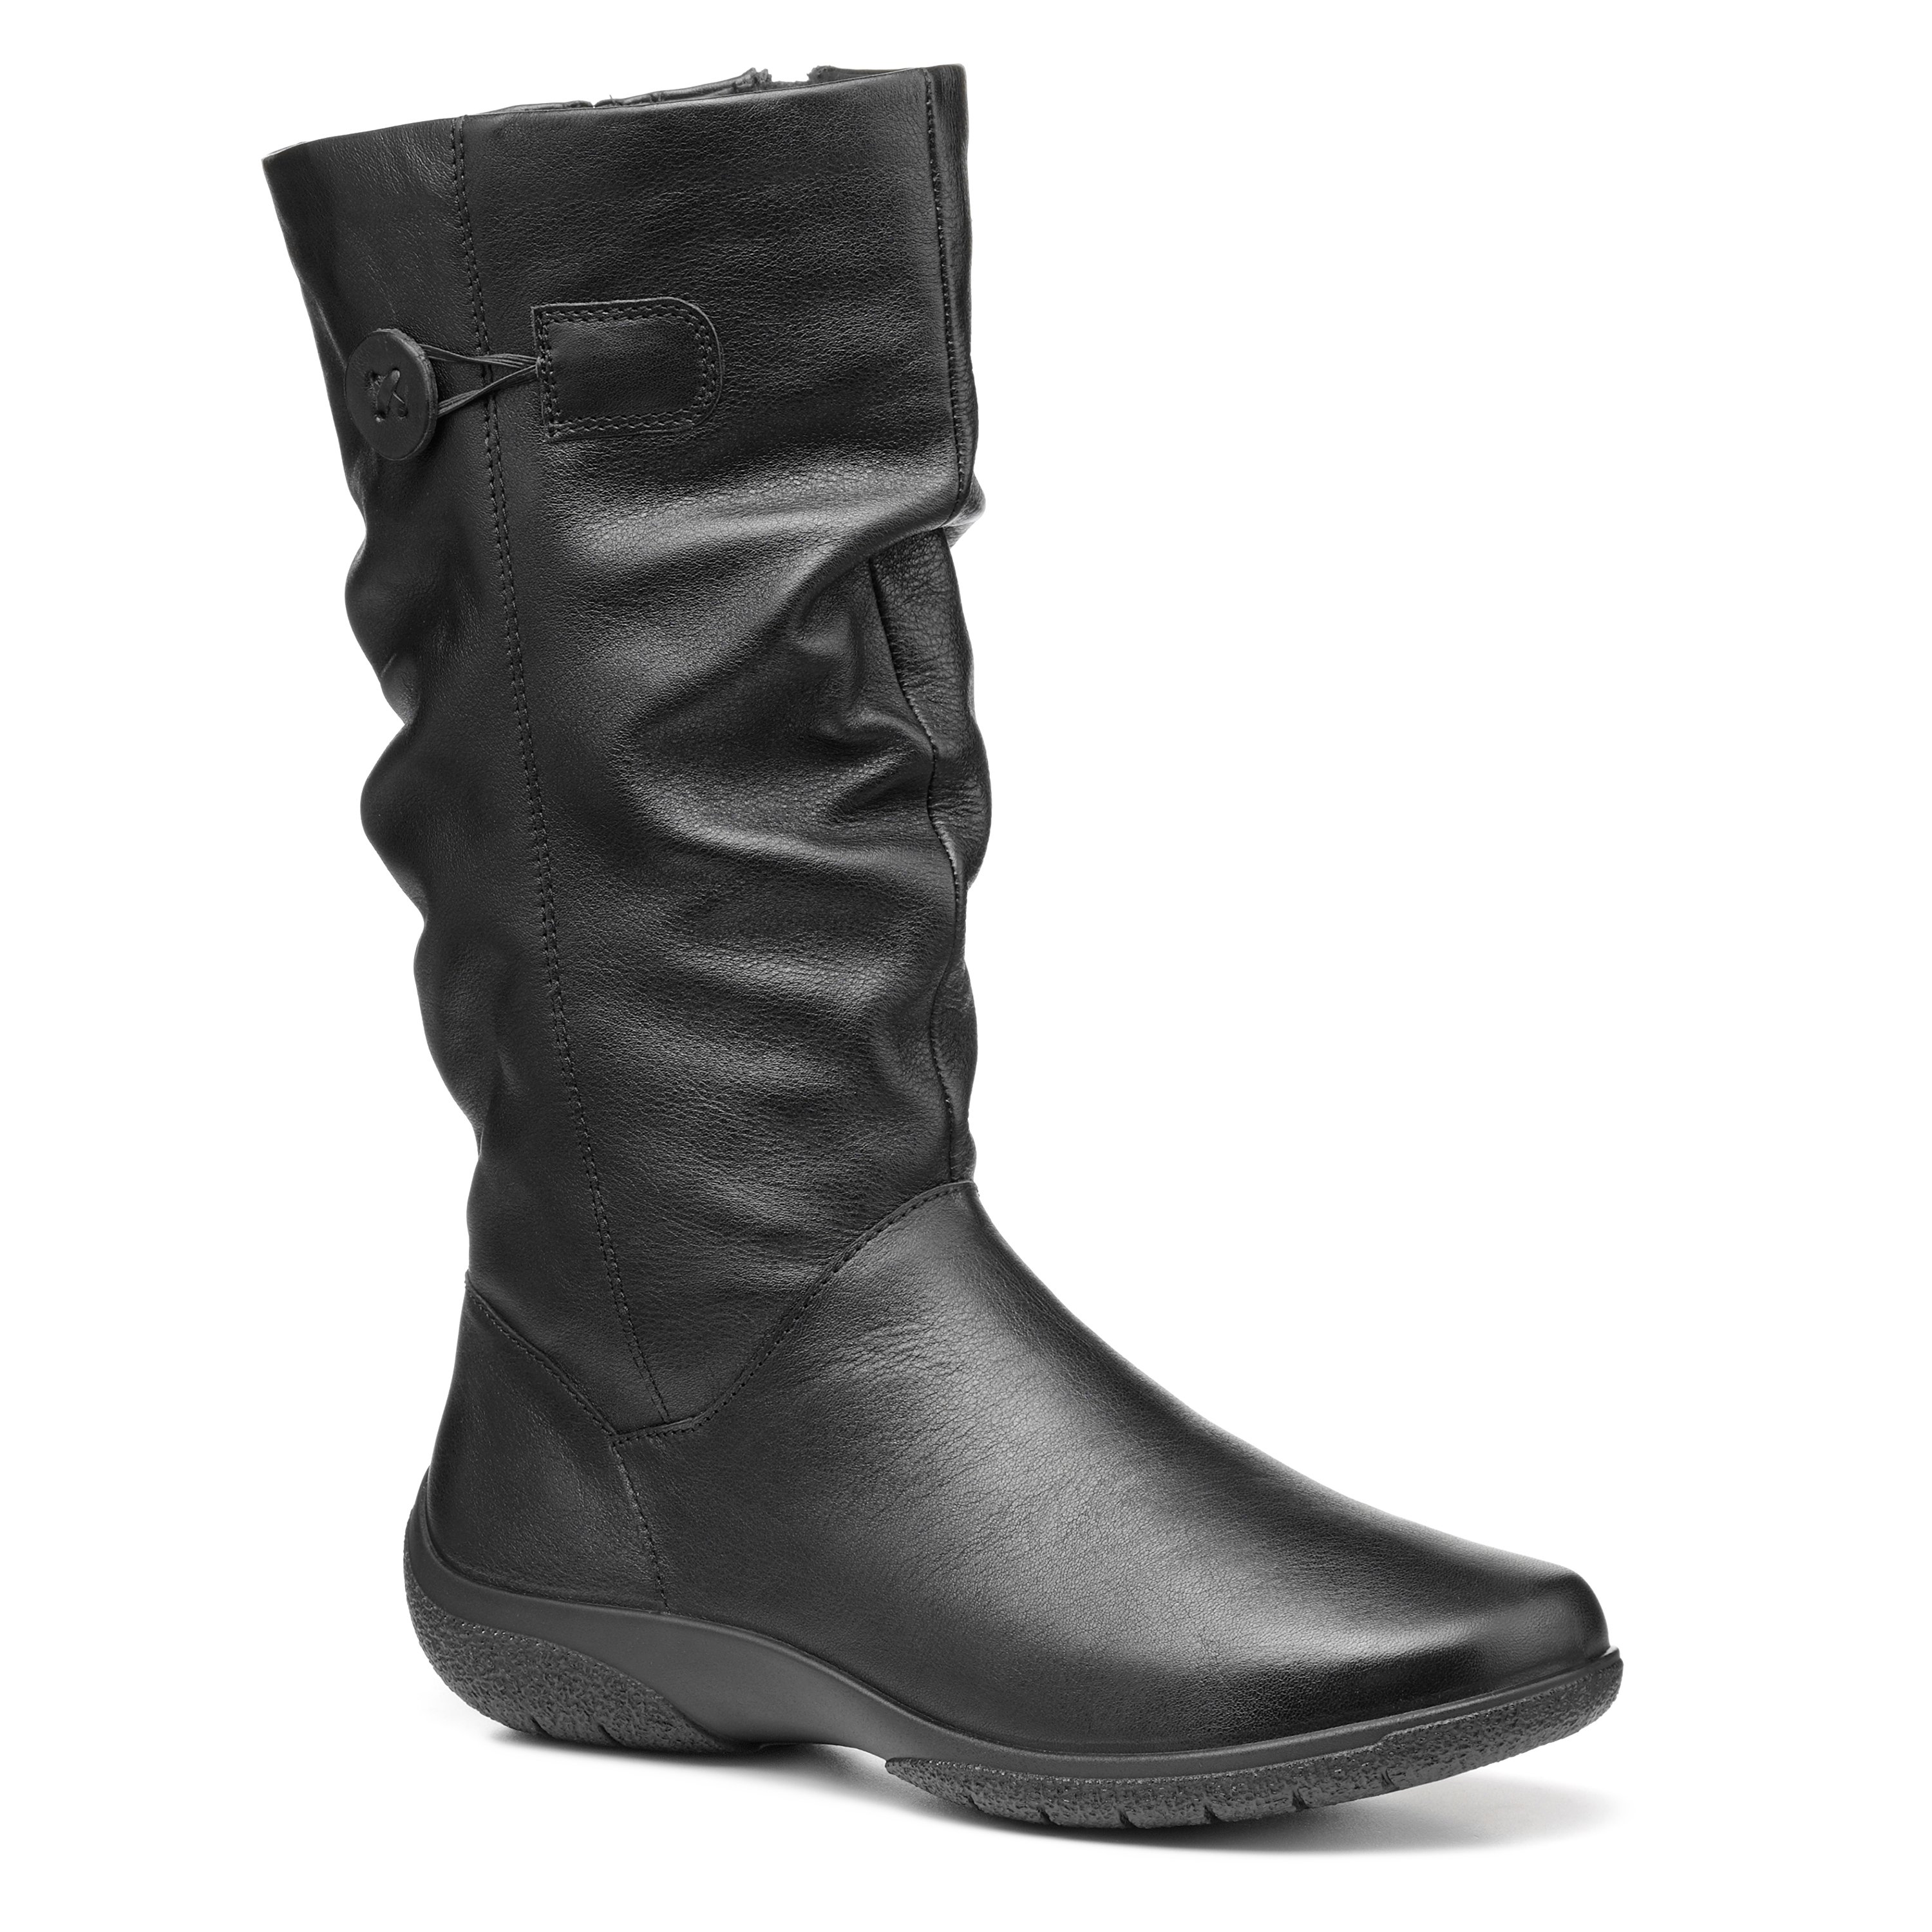 Derrymore II Boots